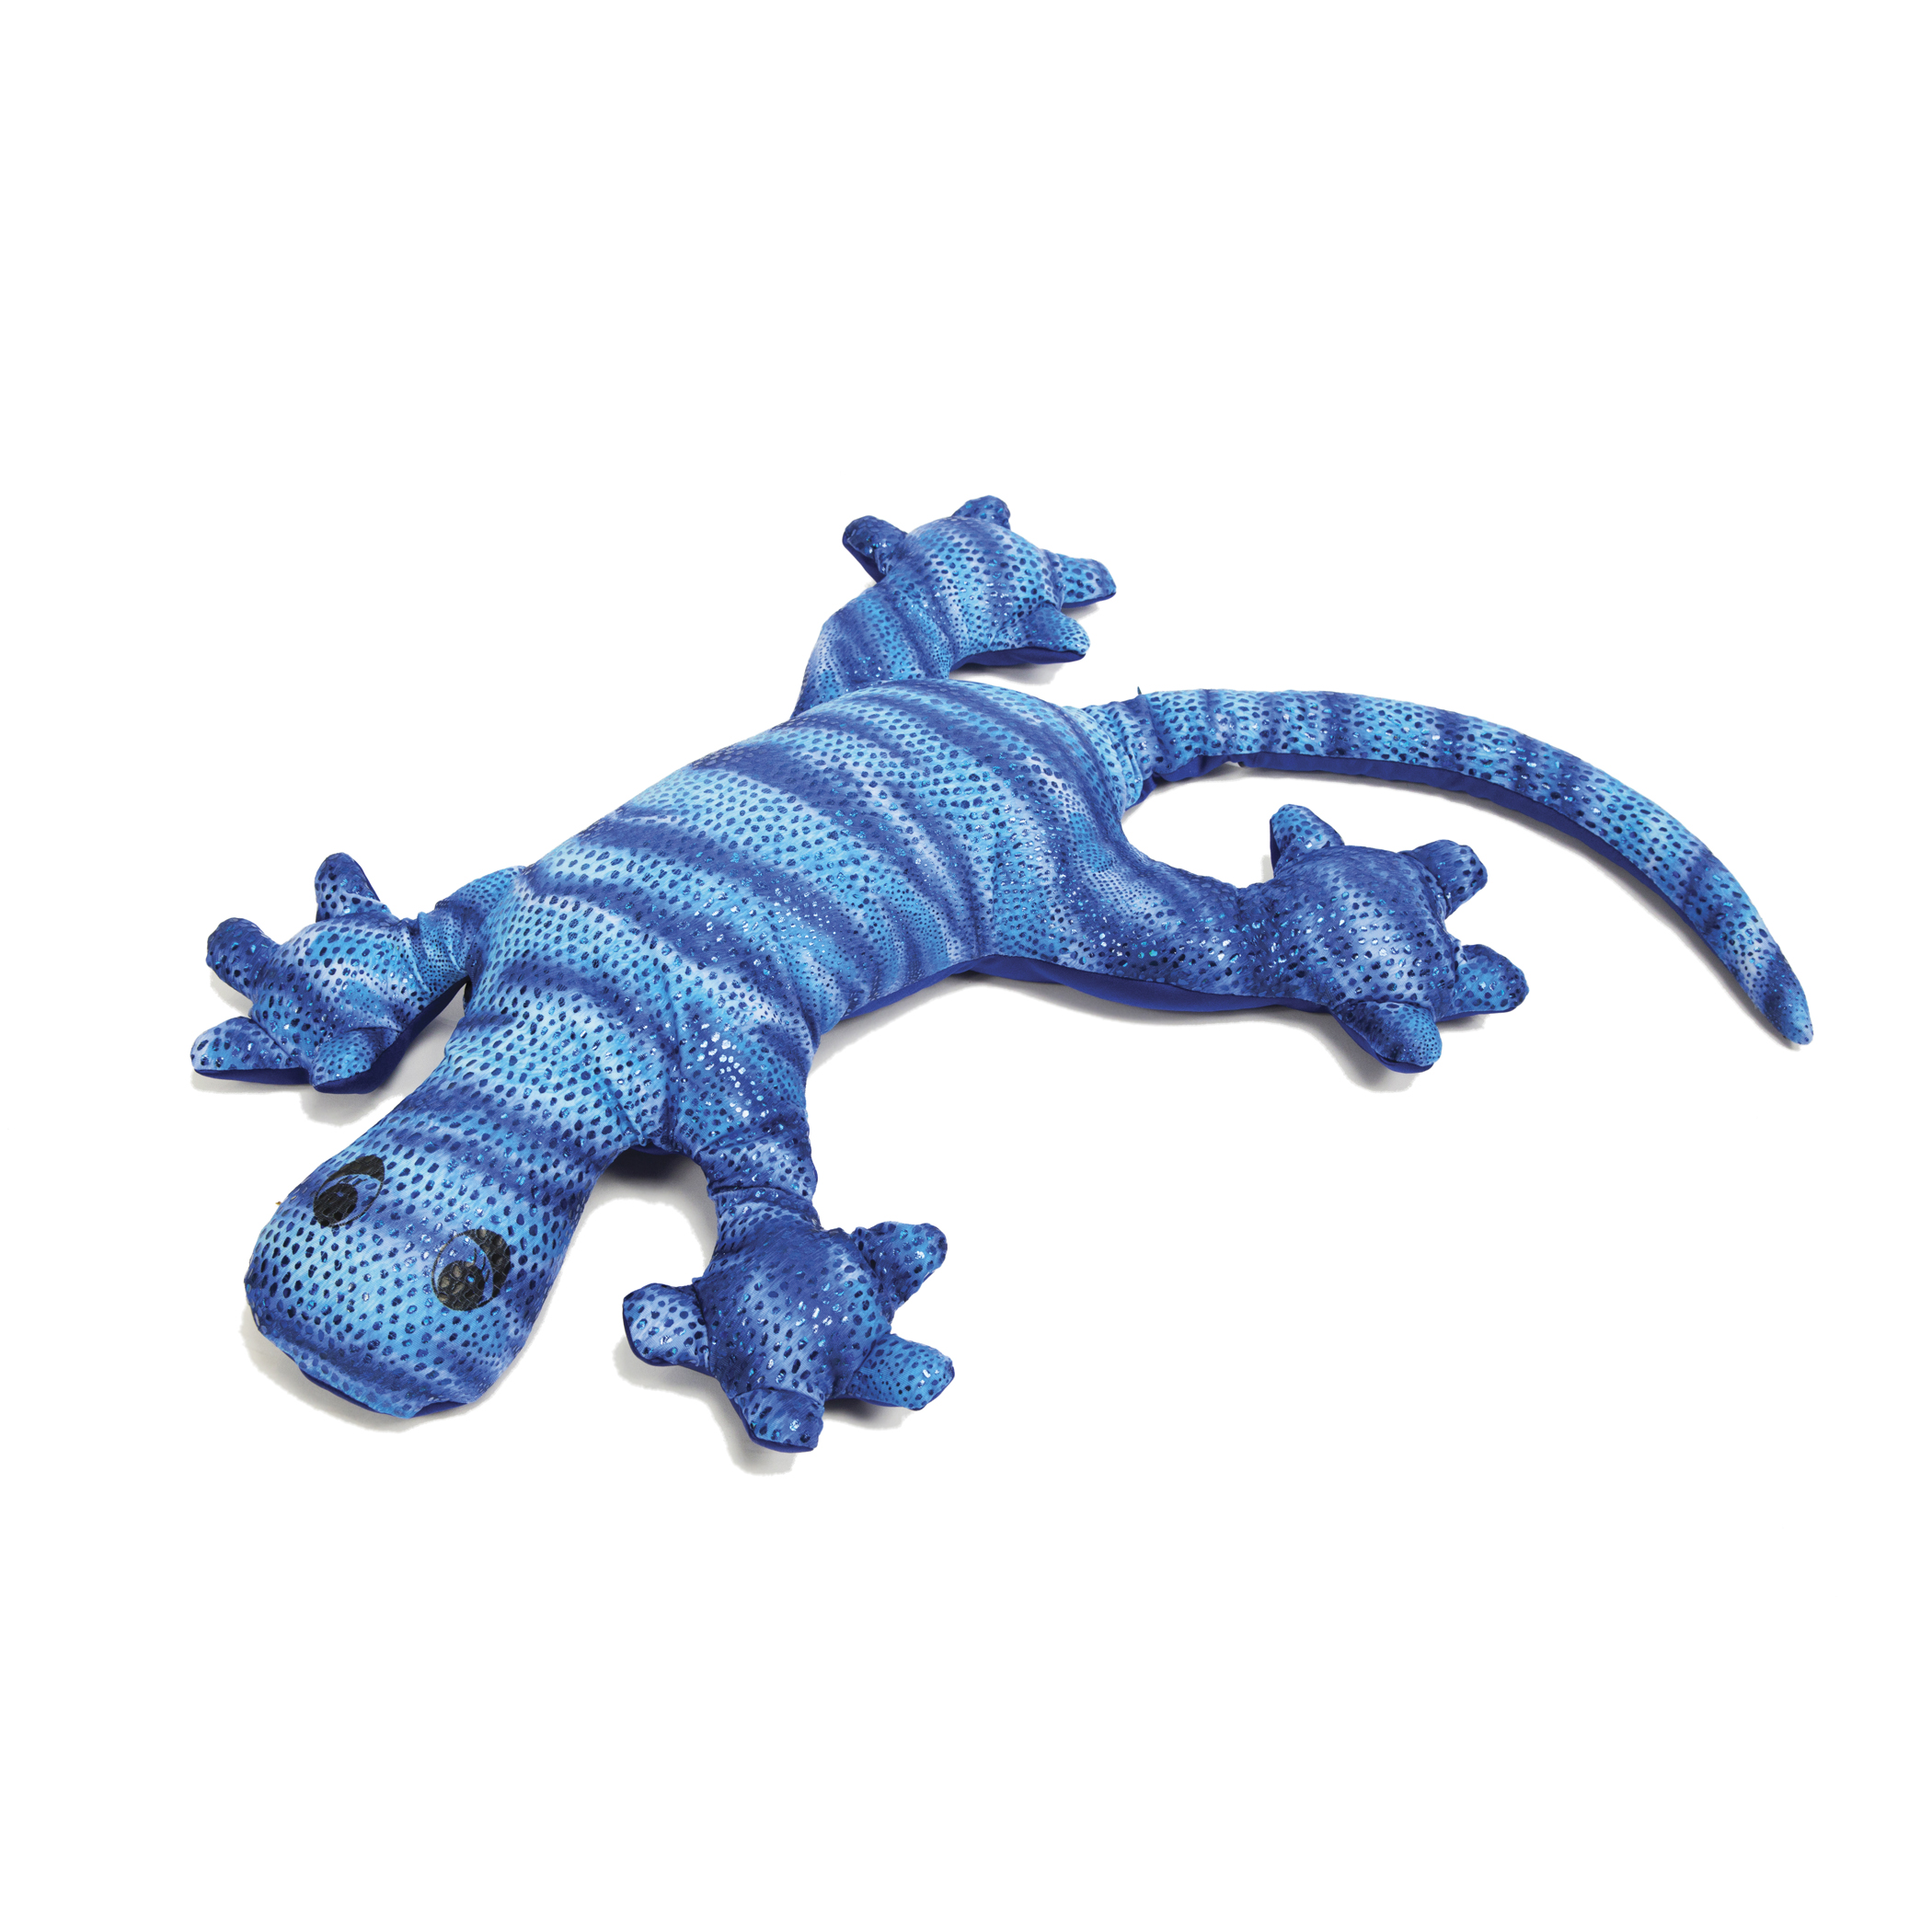 manimo manimo - Lizard Blue 2 kg